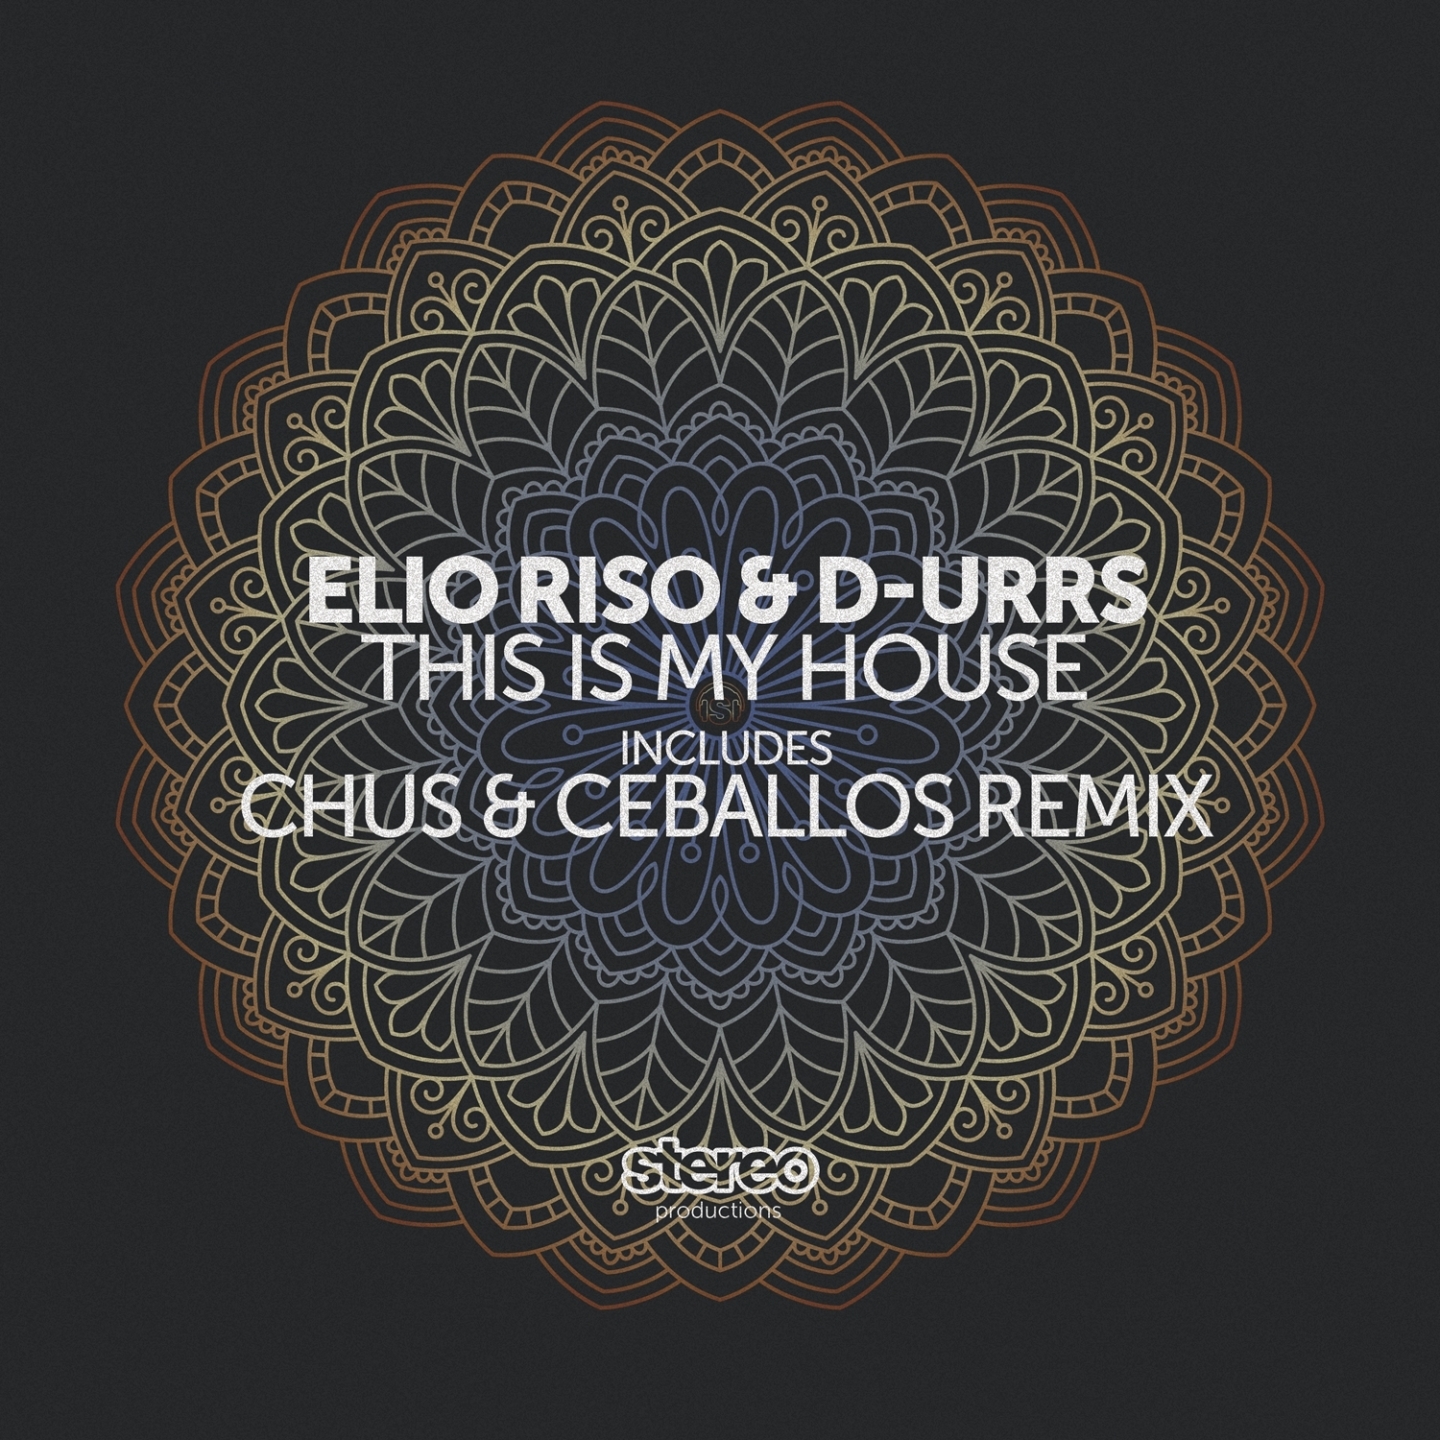 This Is My House (Chus & Ceballos Remix)